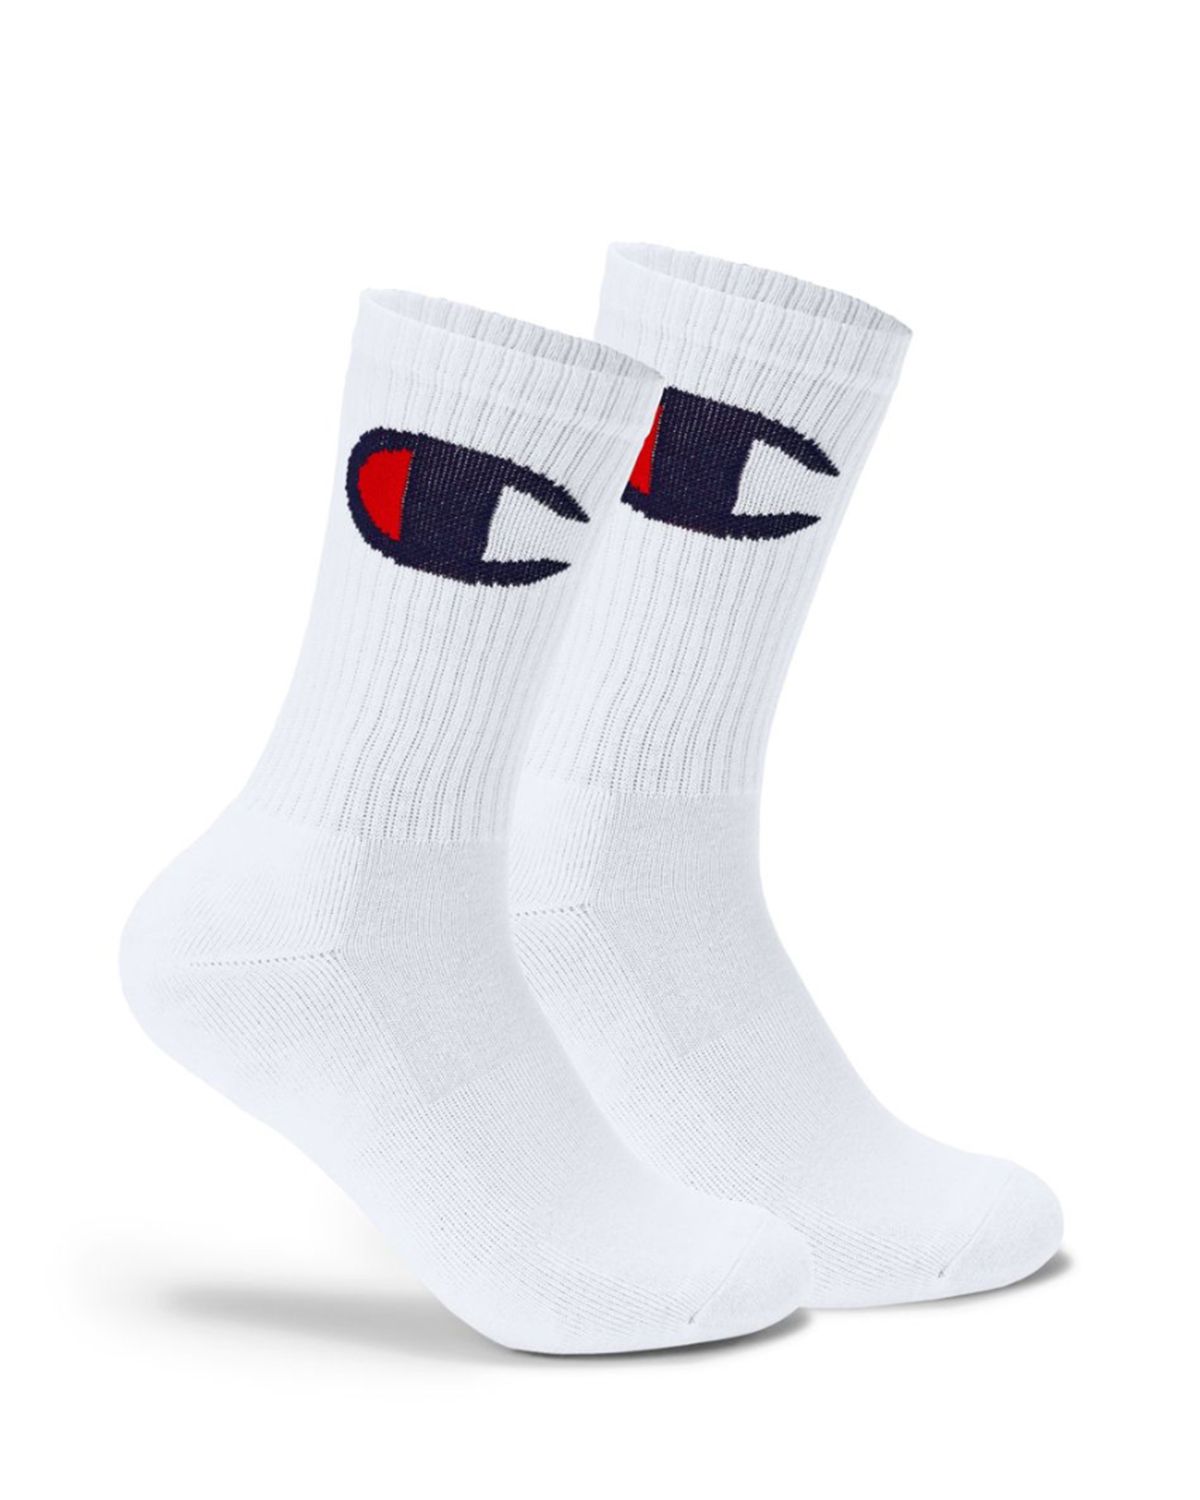 stirling sports socks